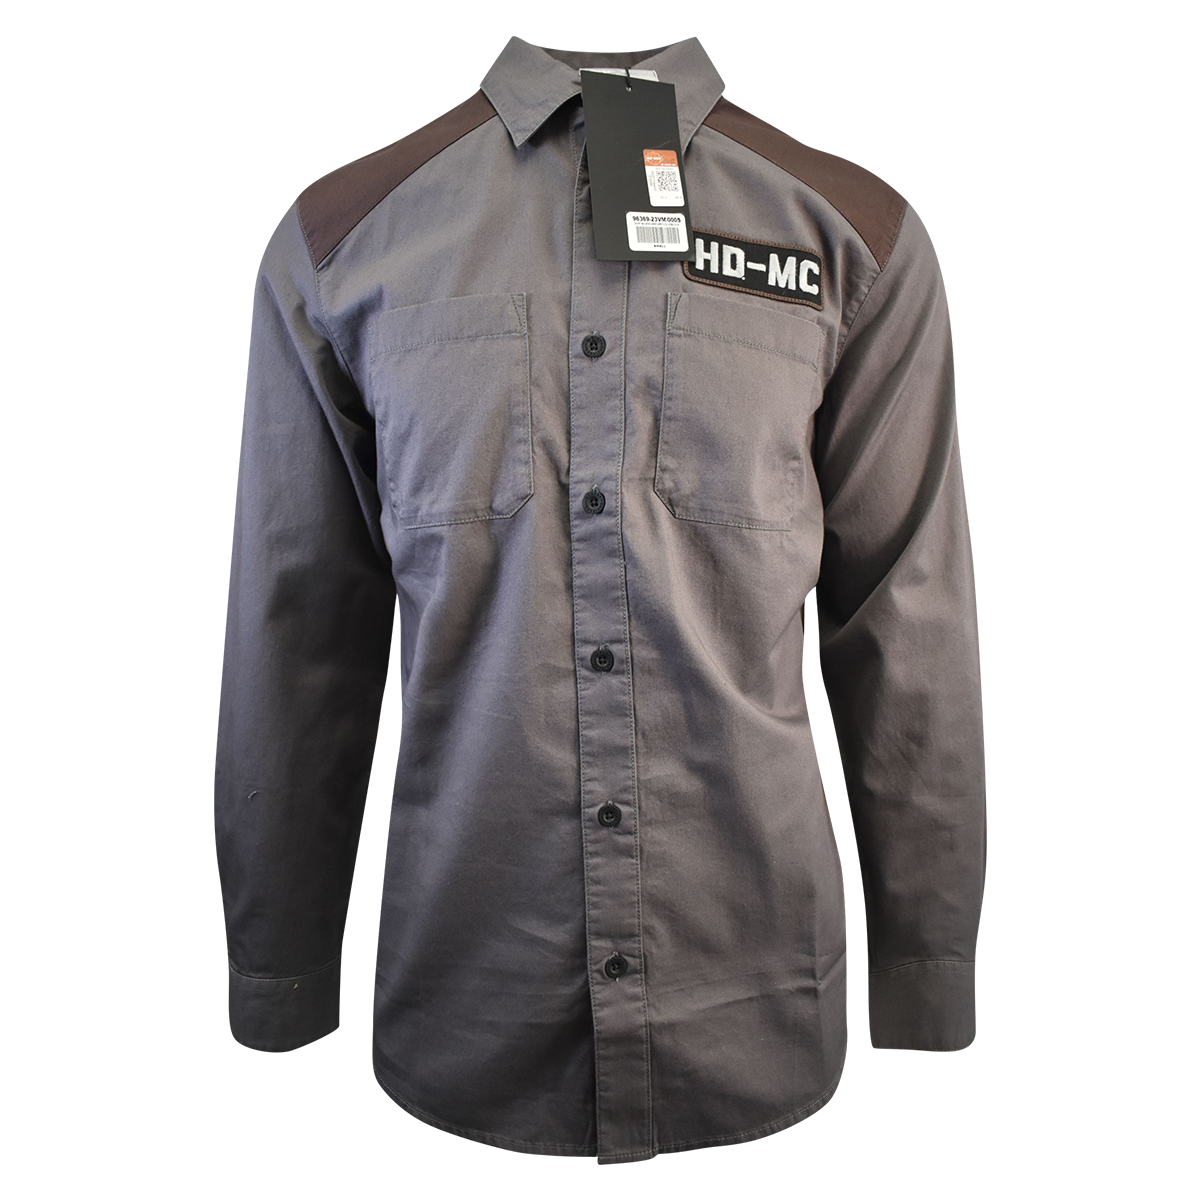 Harley-Davidson Men's Shirt Dark Grey HDMC Long Sleeve Woven (127)